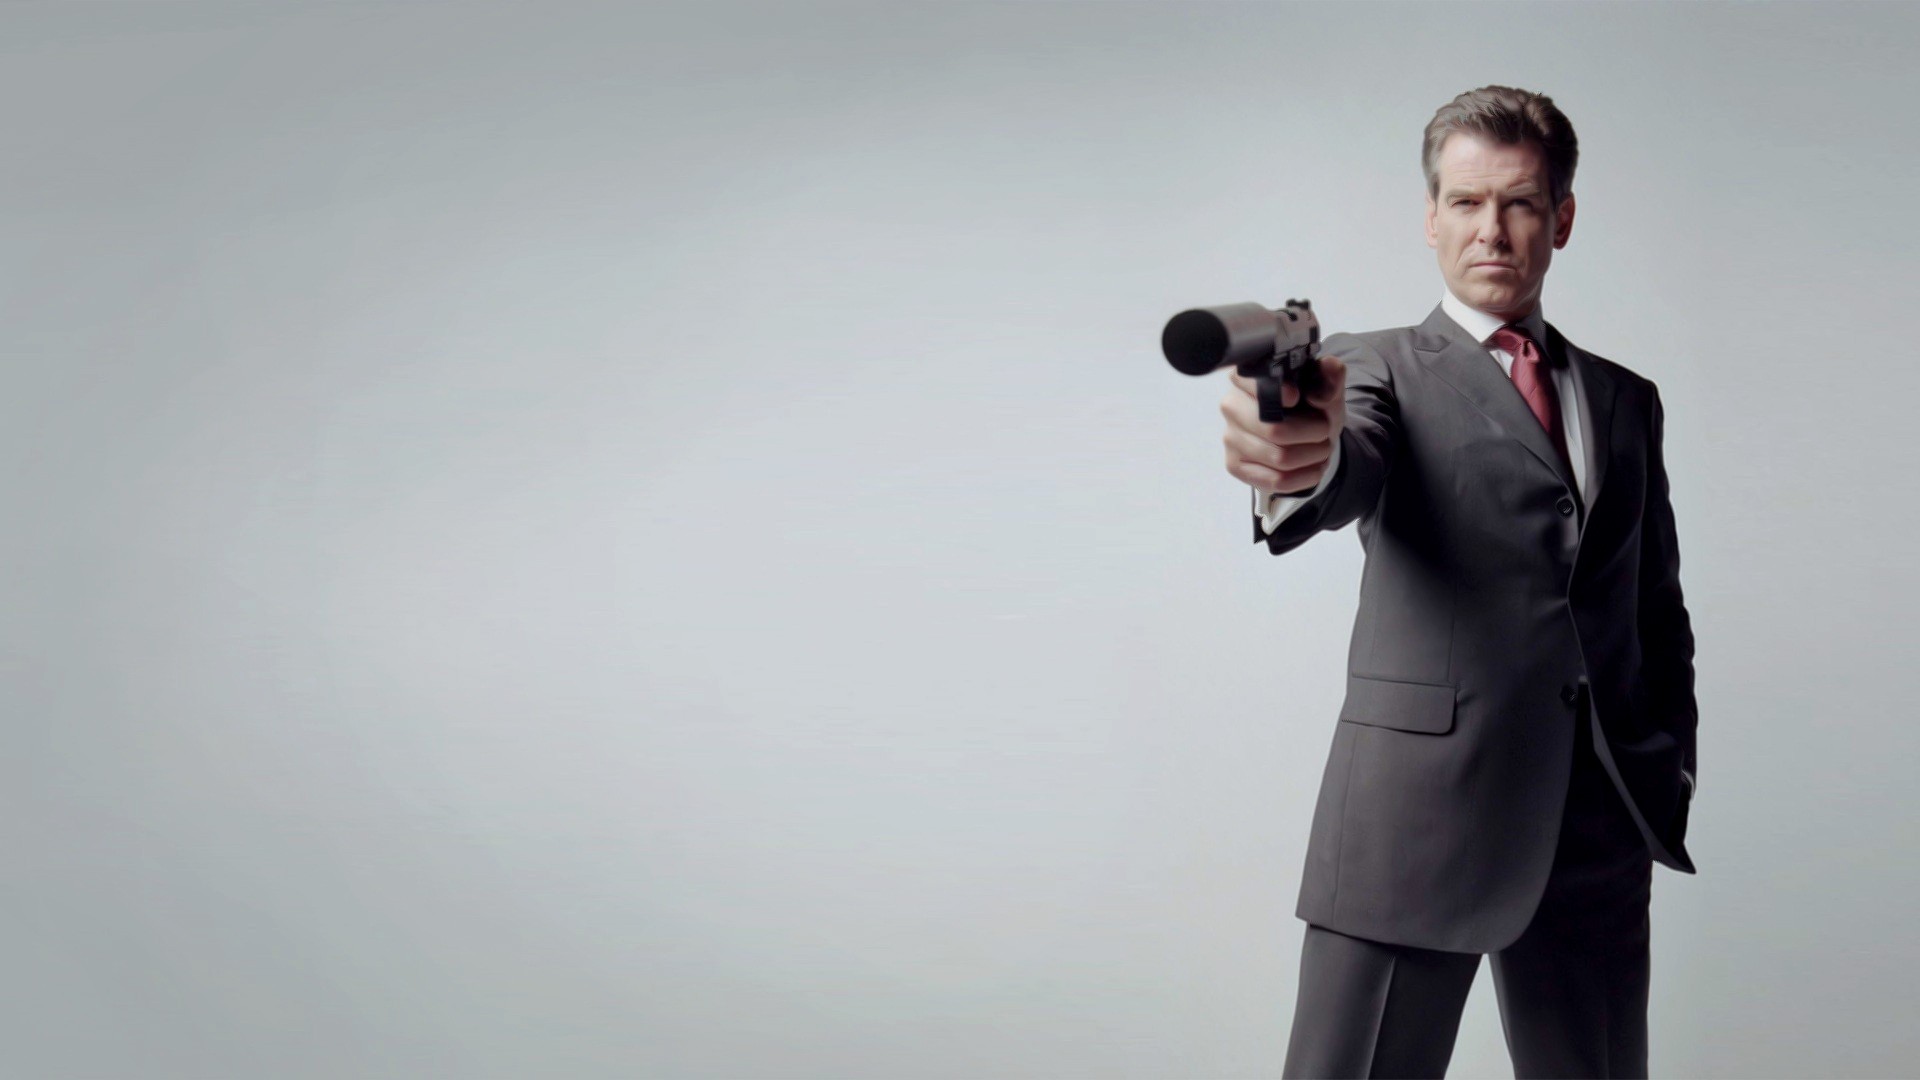 People 1920x1080 Pierce Brosnan movies Walther P99 suppressors gun weapon James Bond tie suits simple background men actor